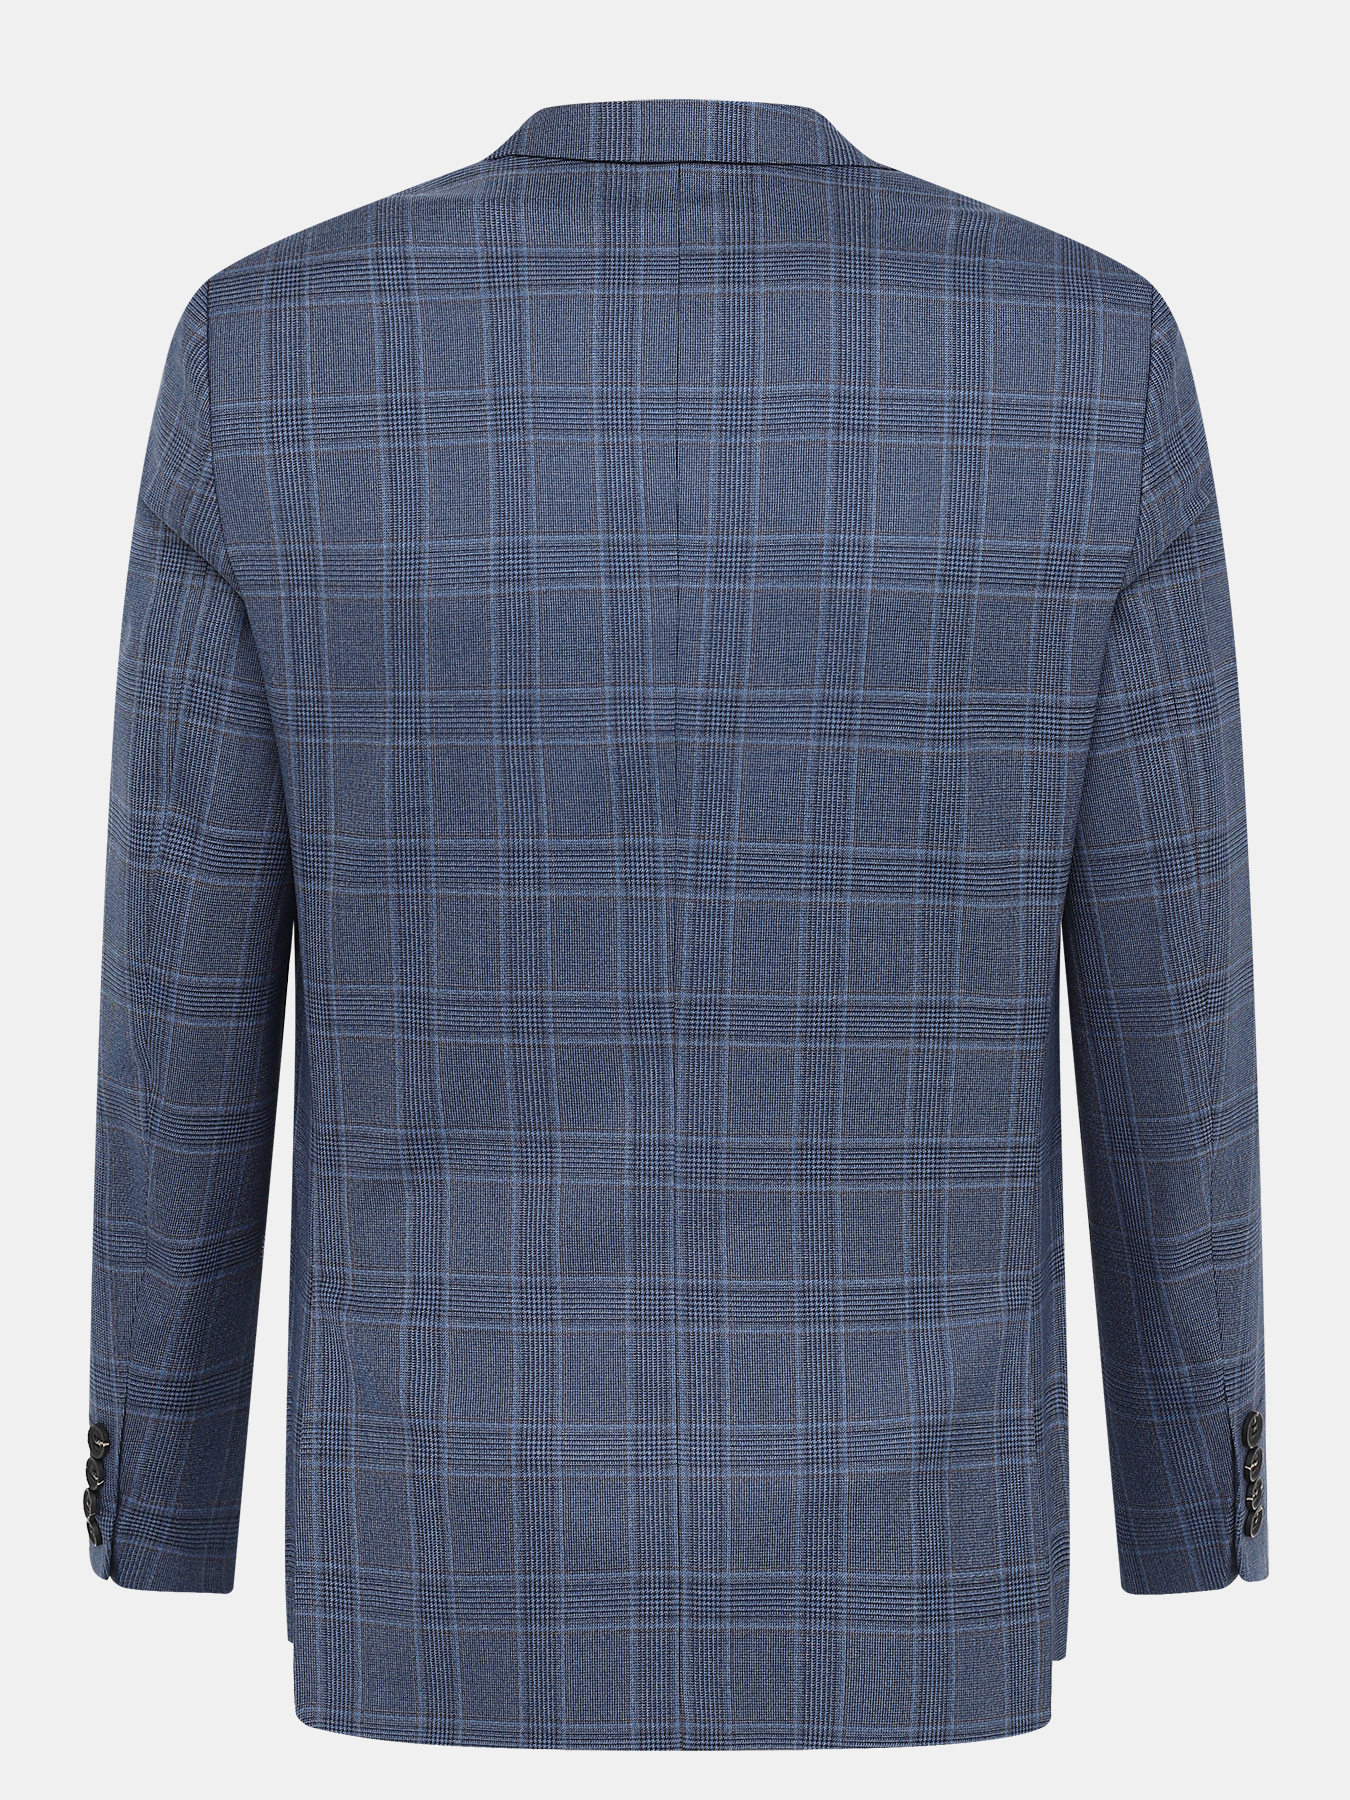 Пиджак Alessandro Manzoni 396177-072, цвет синий, размер 50 - фото 3